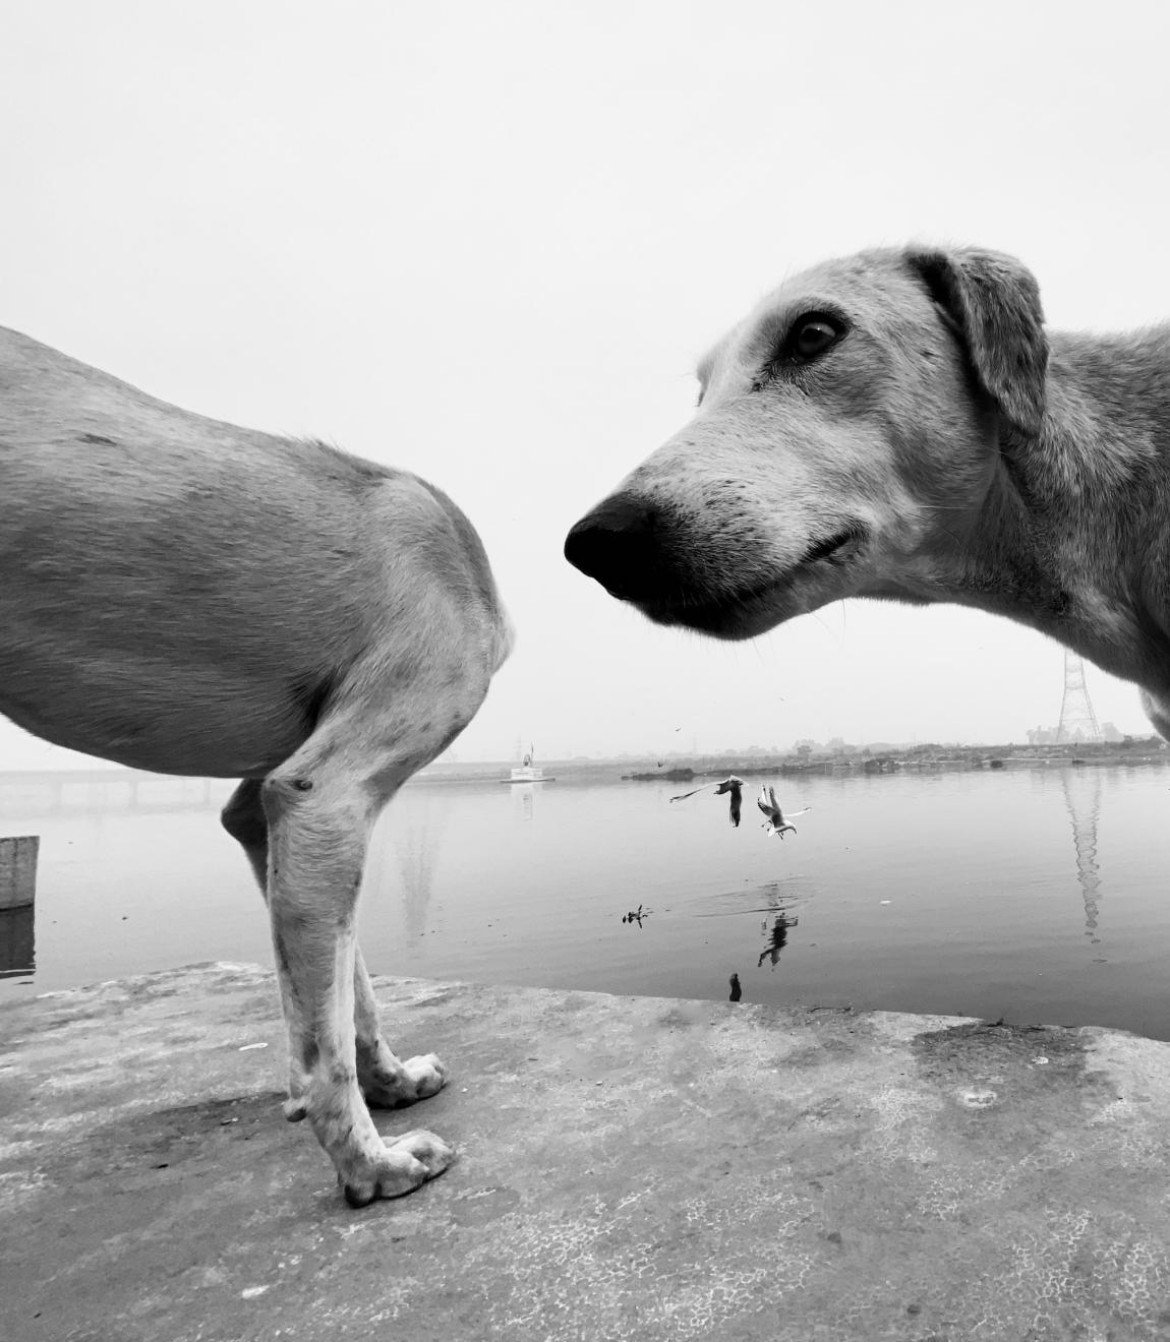 fot. Dimpy Bhalotia, "Urban Animal" / nagroda w konkursie Urban International Photo Awards 2020